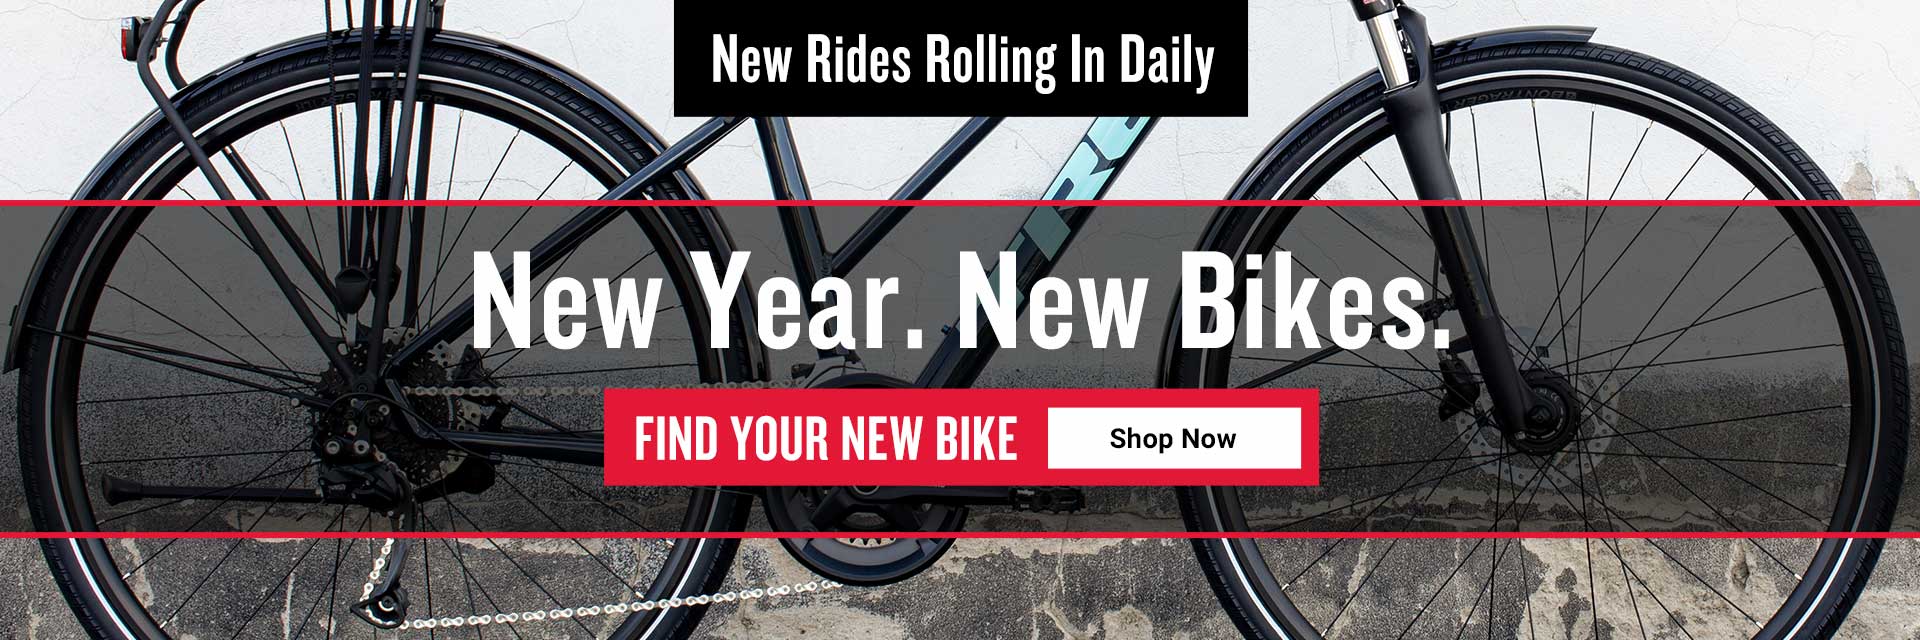 village cycle center coupon